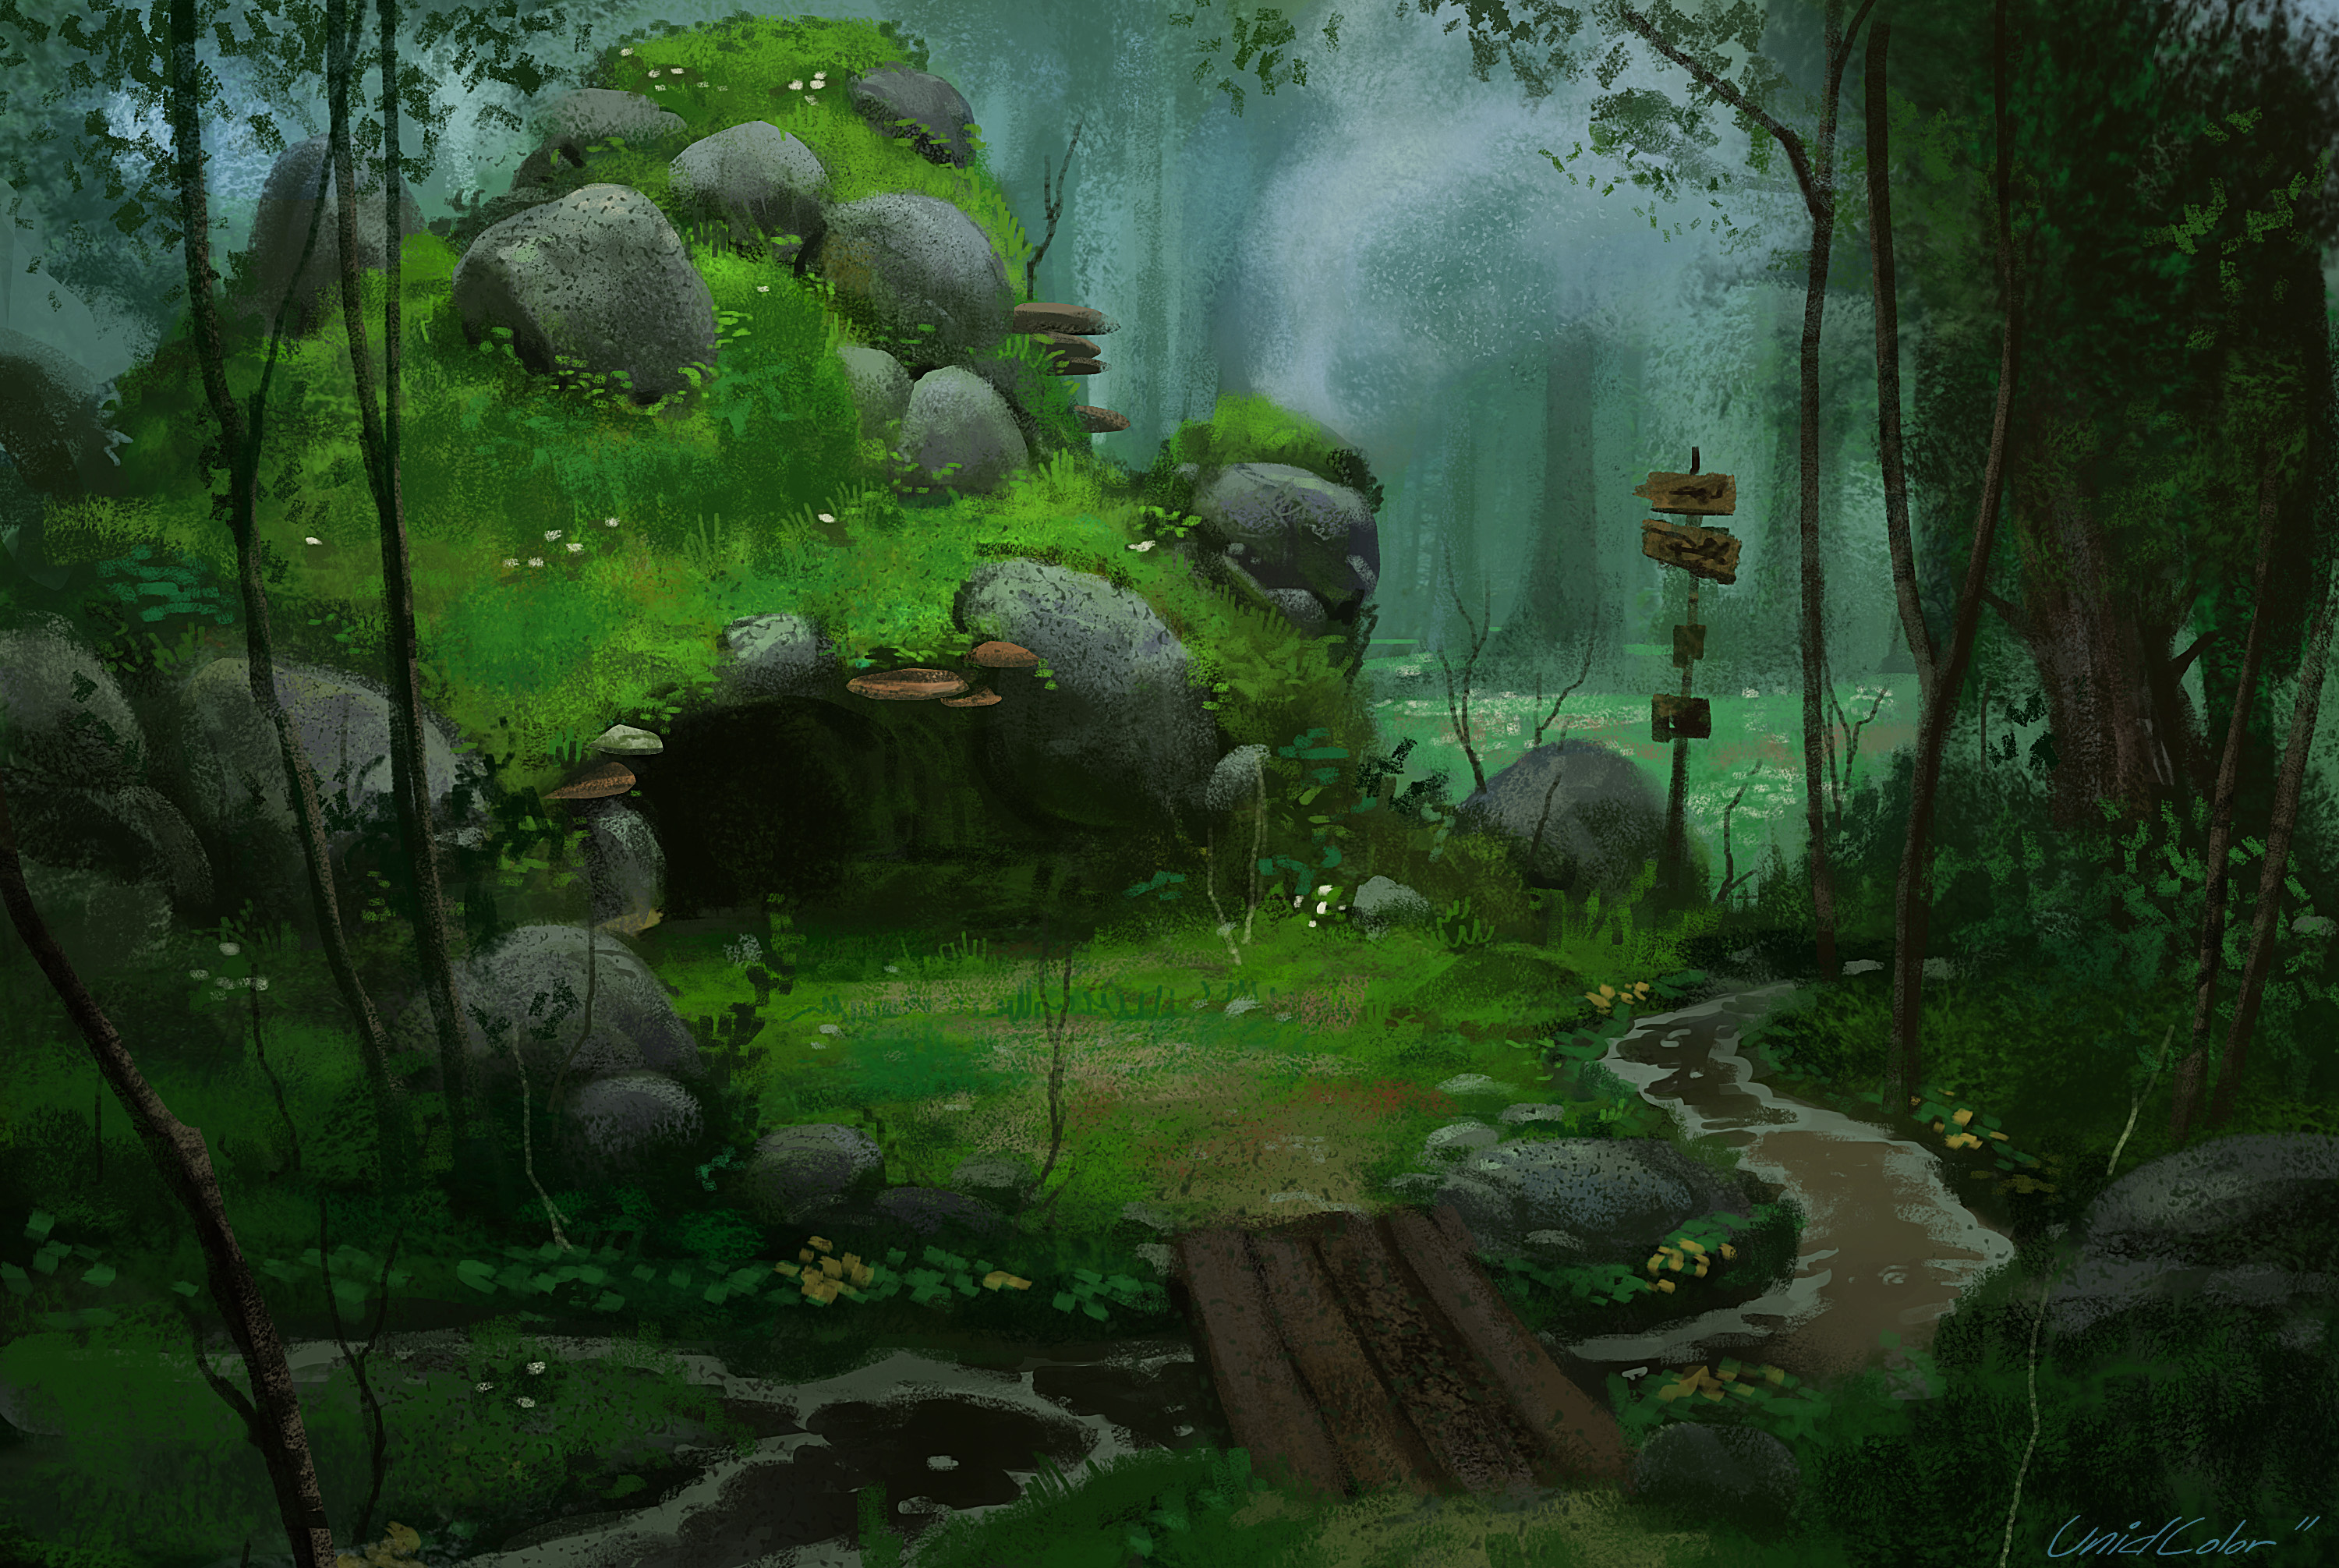  forest scene Computer Wallpapers Desktop Backgrounds 3000x1894 ID